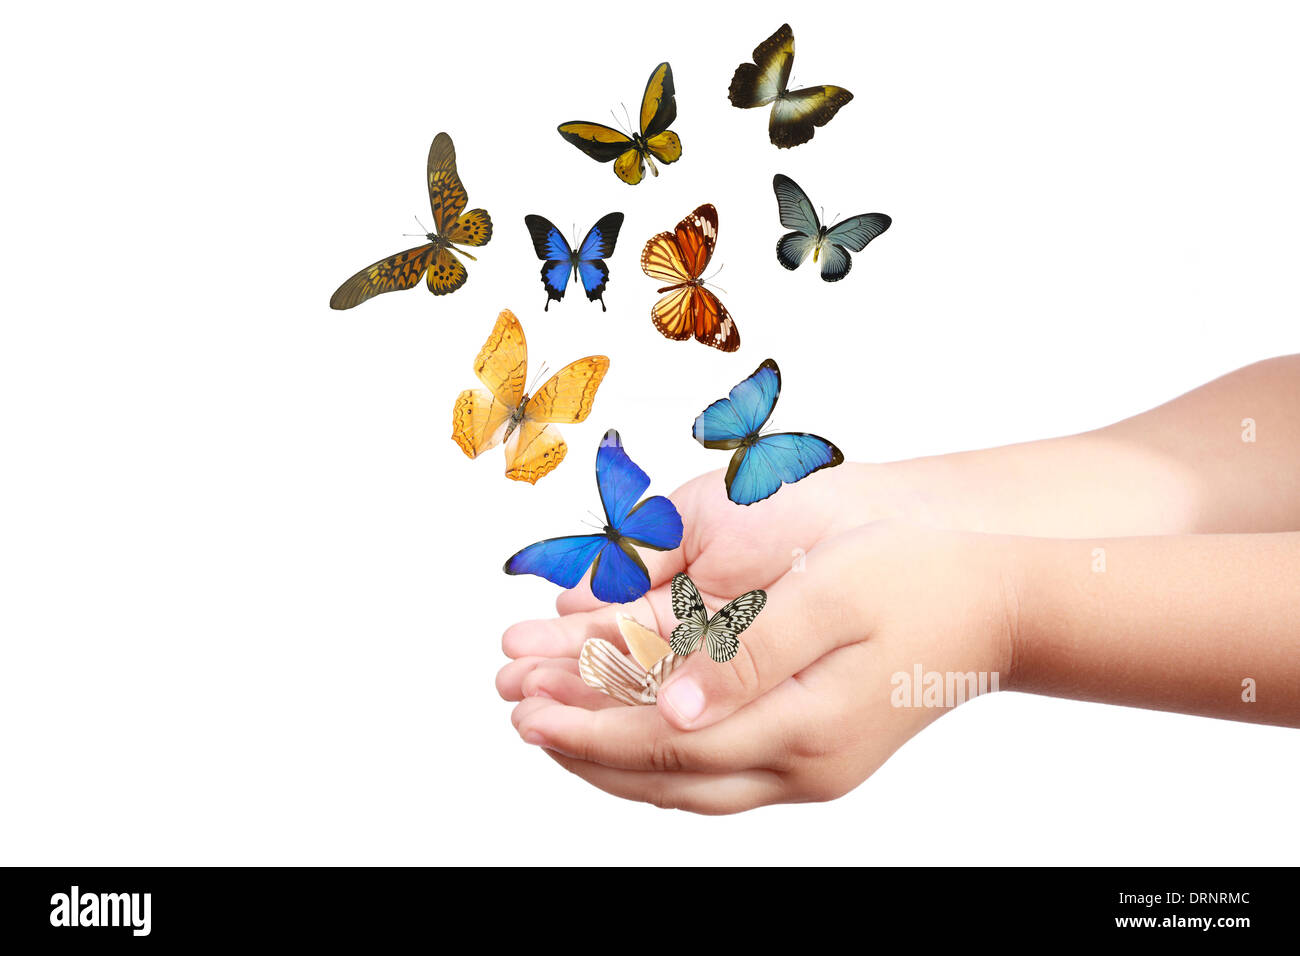 child's hand releasing butterflies Stock Photo